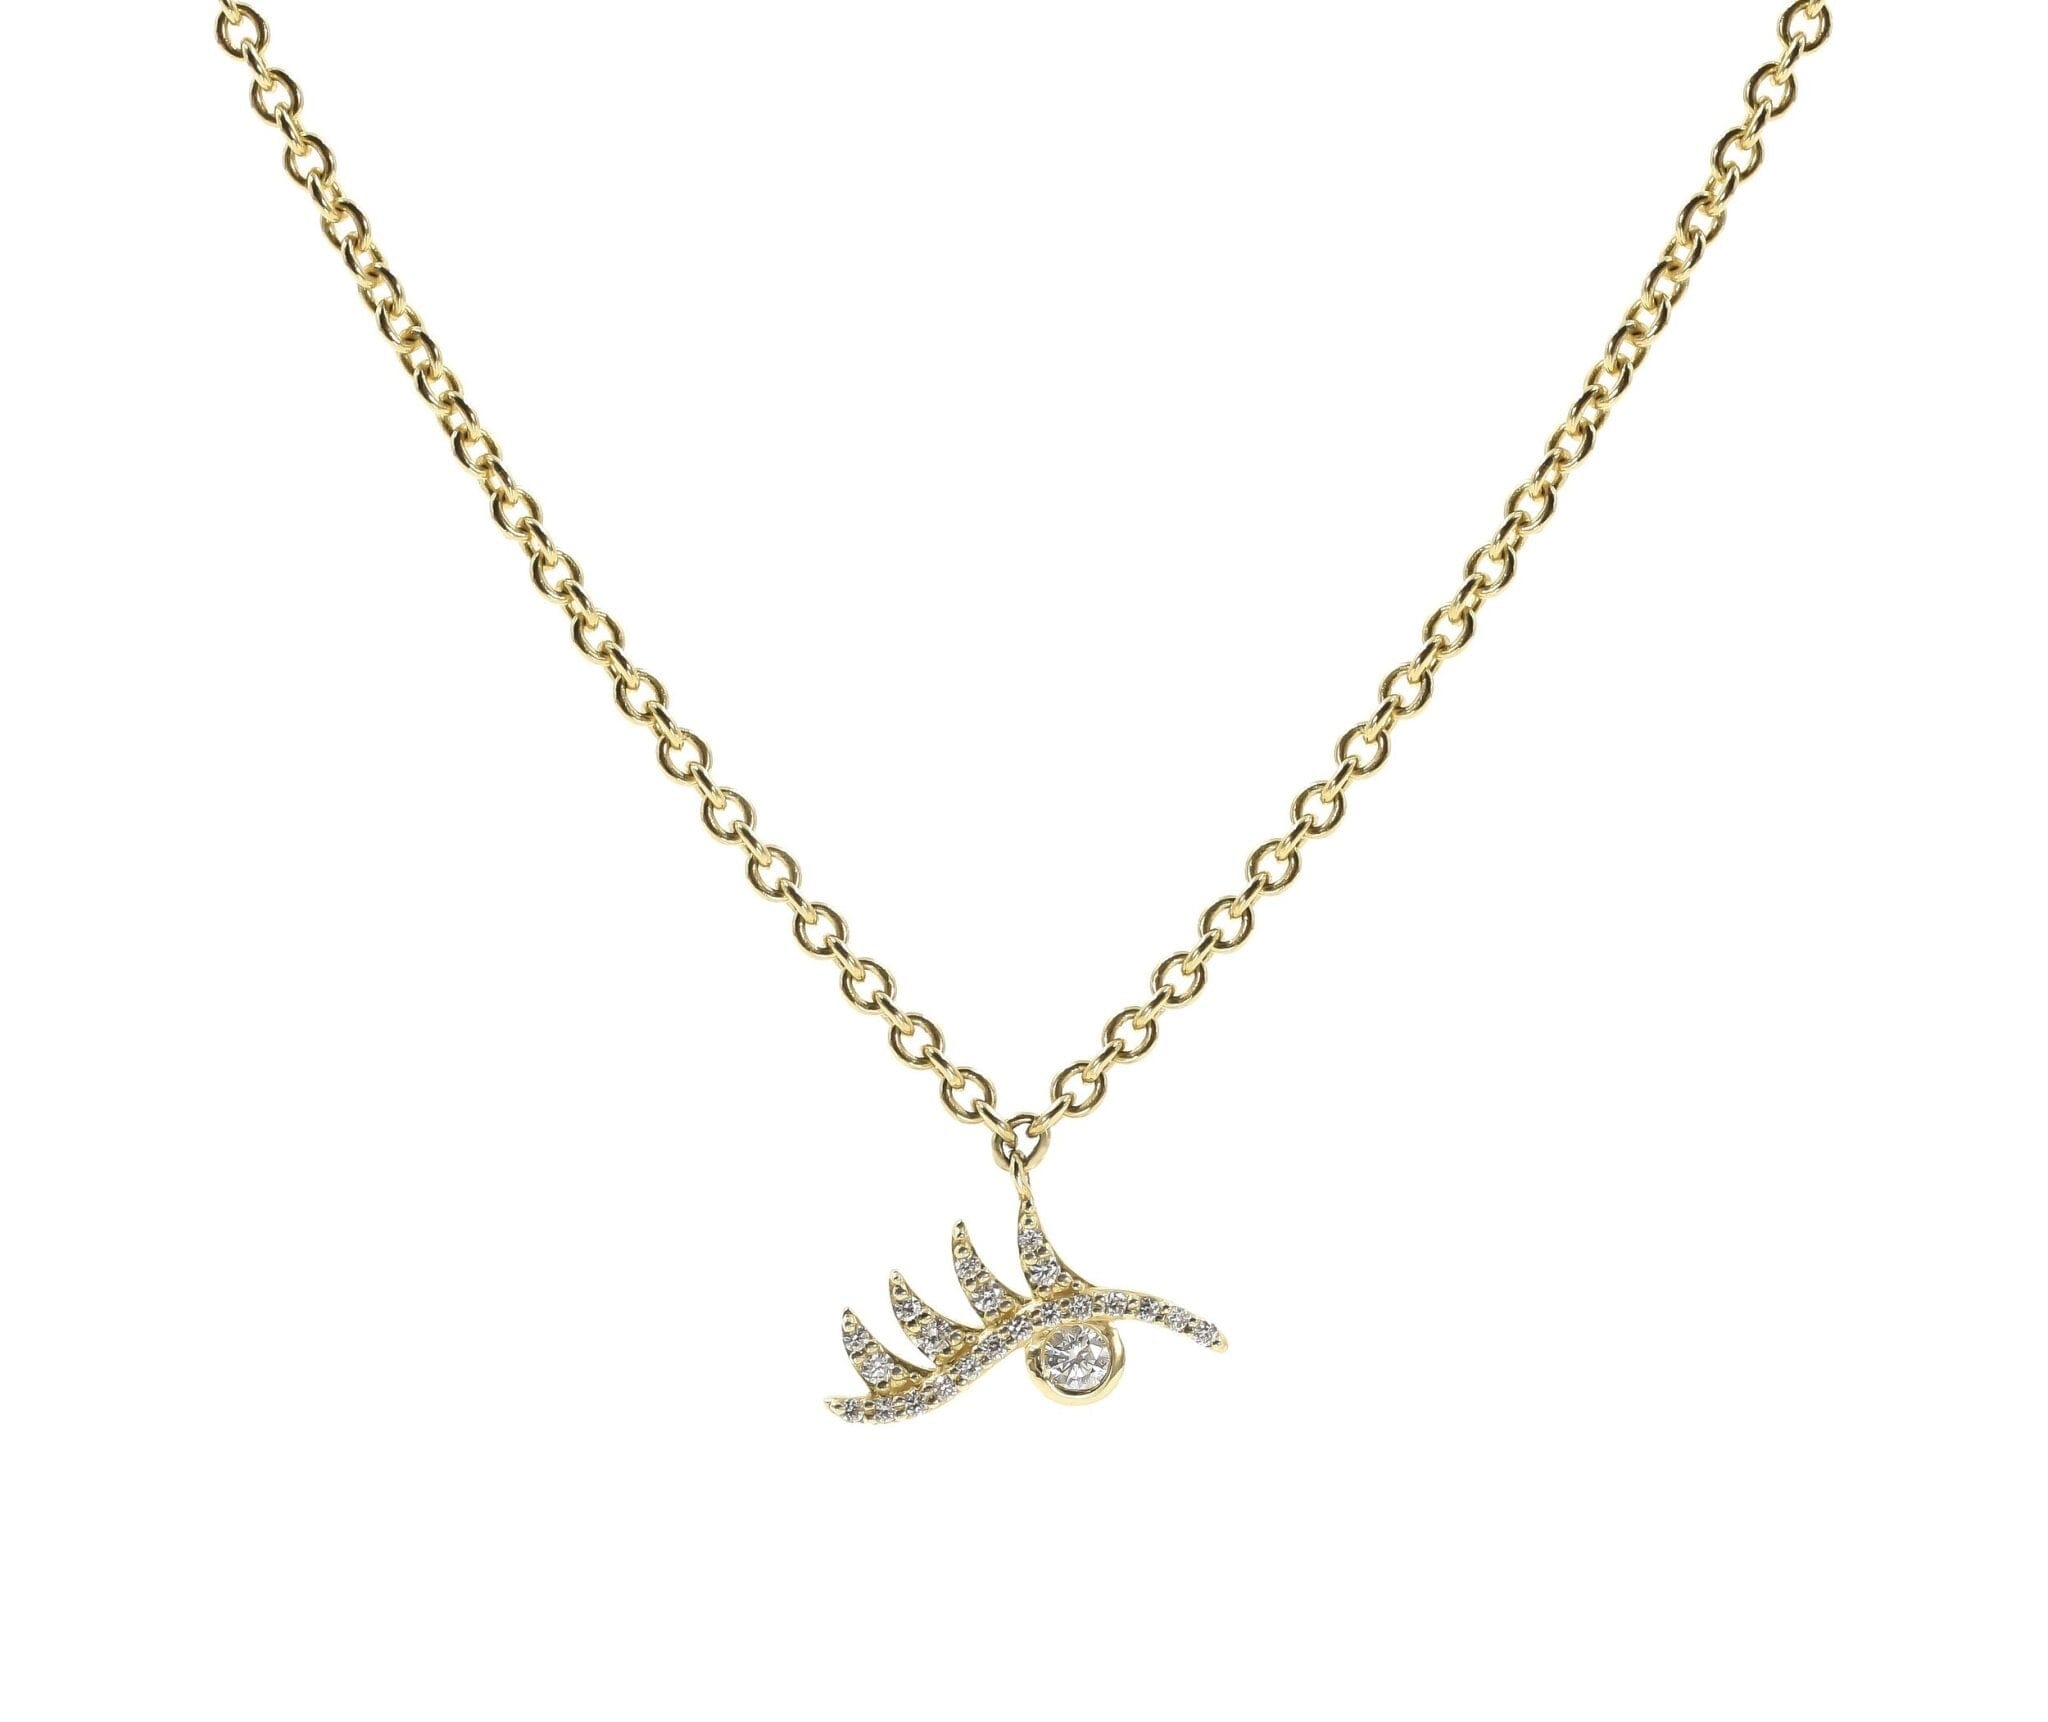 Pave Wink Necklace Necklaces - BONDEYE JEWELRY ®